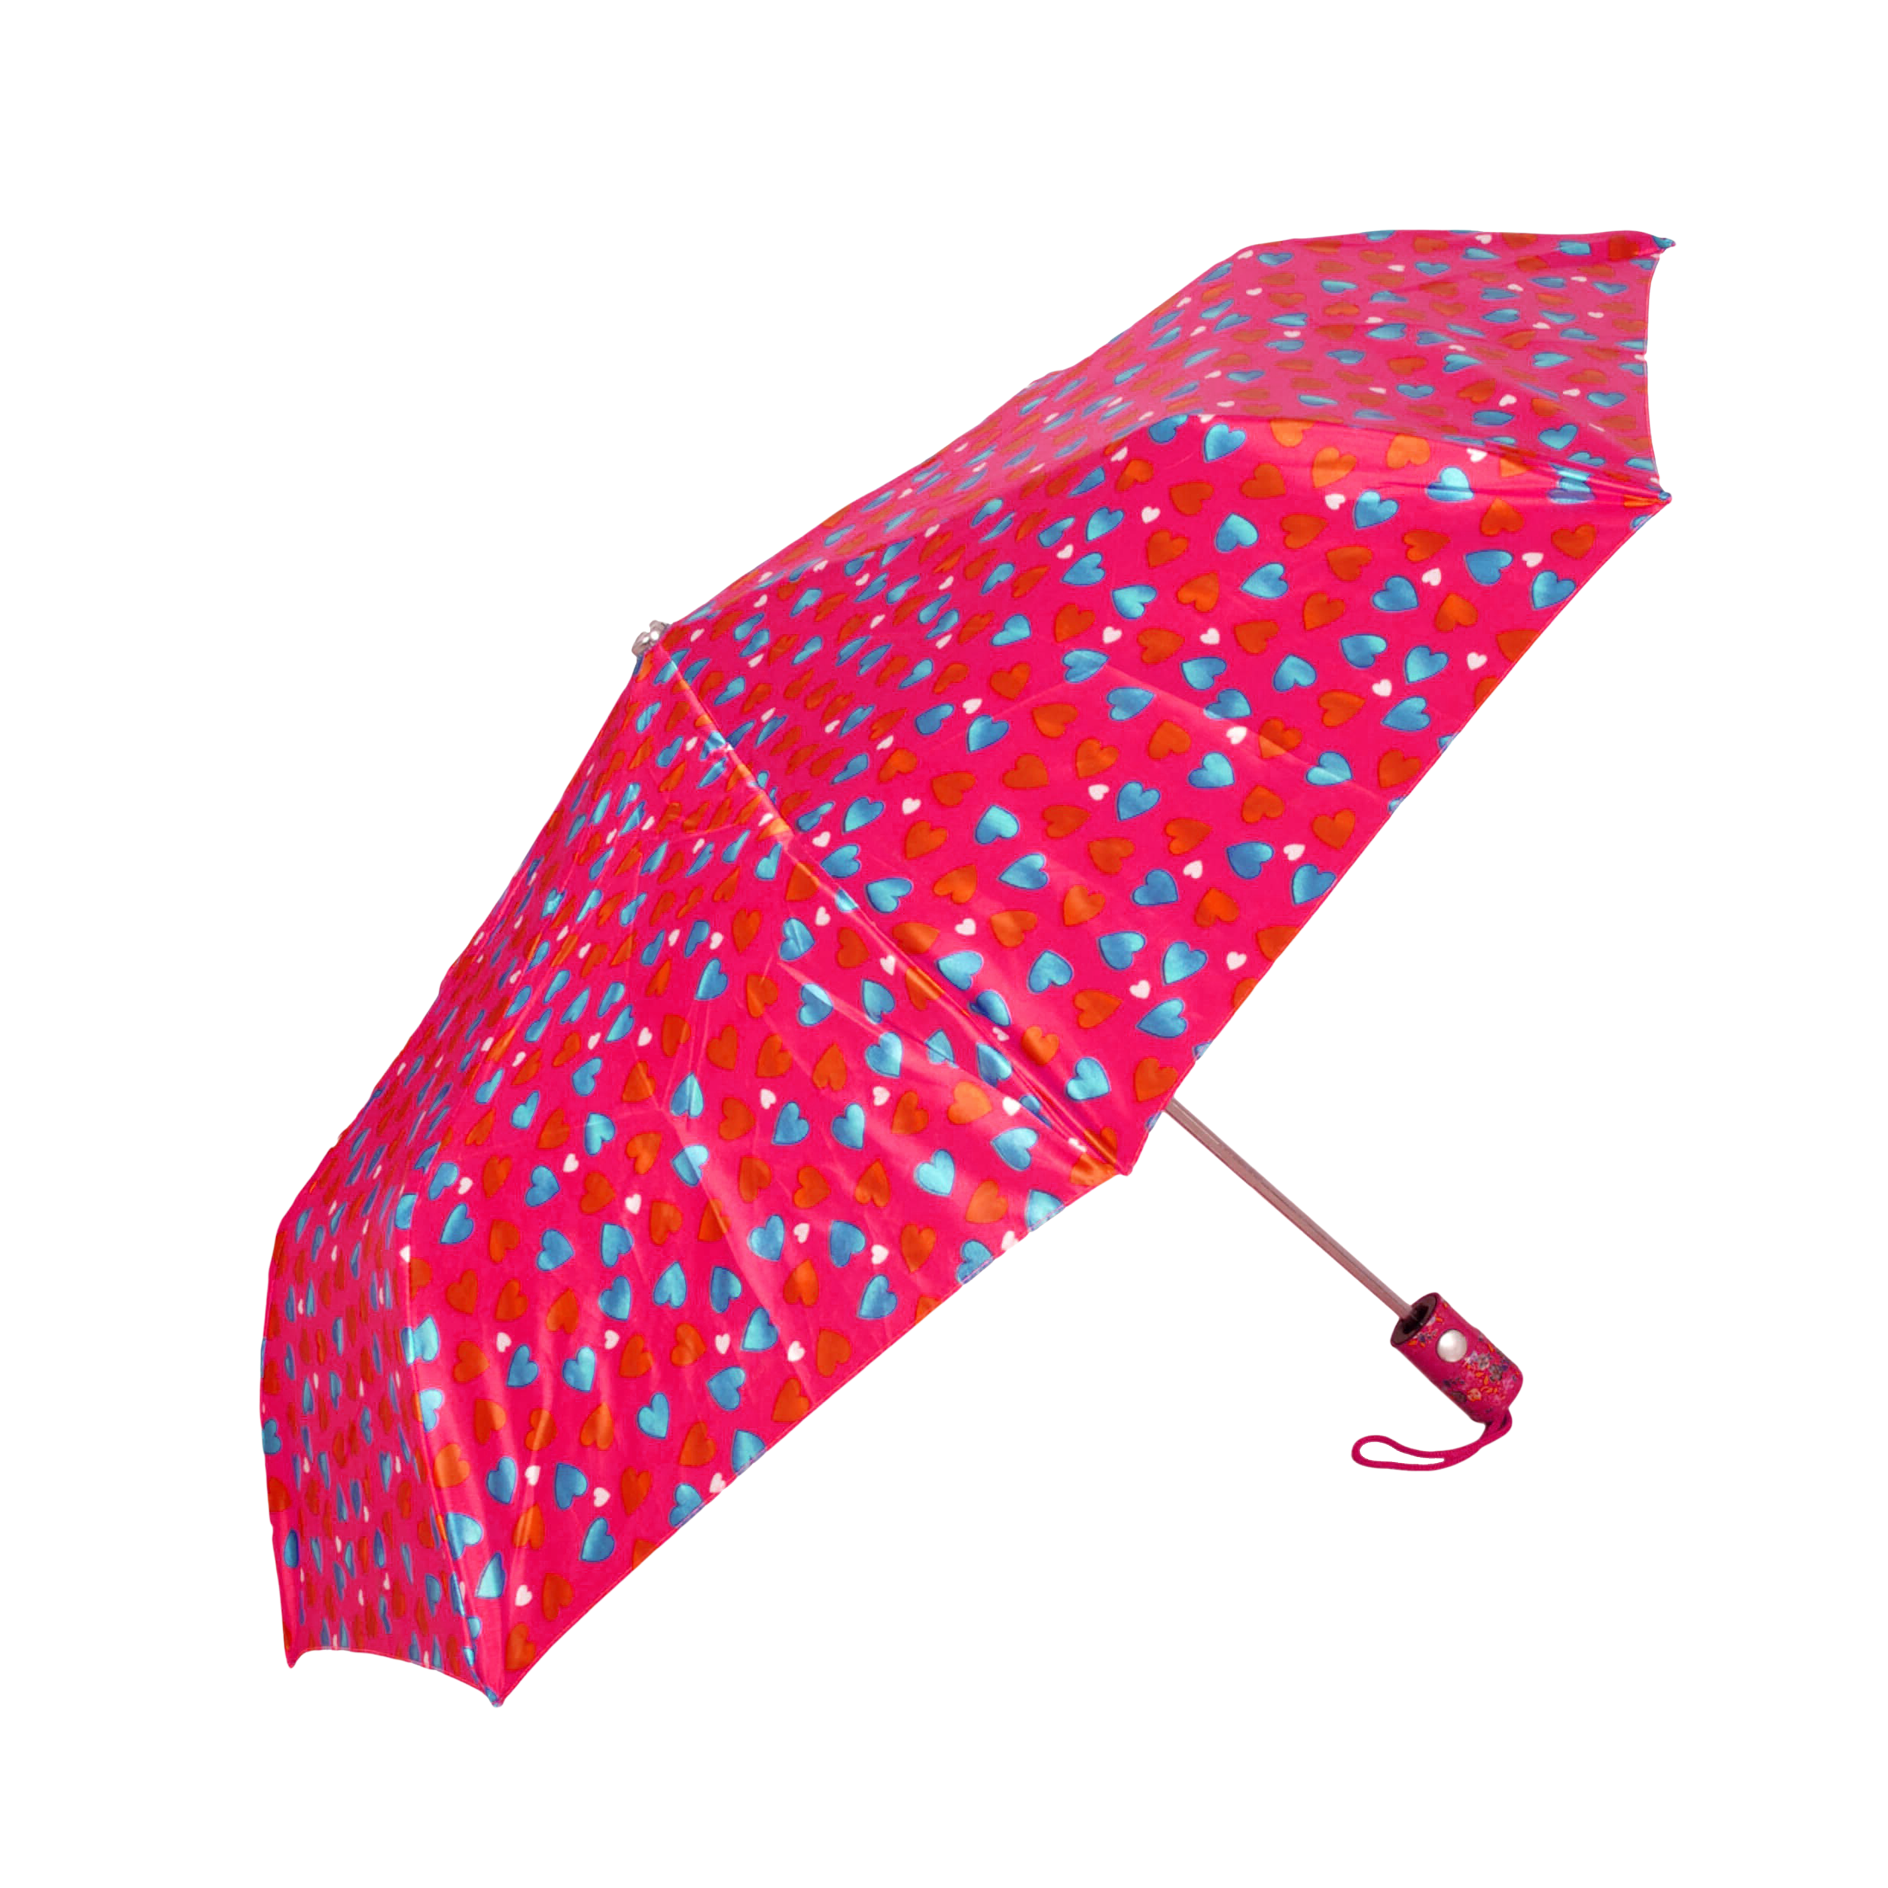 Pink Umbrella PNG Image in Transparent